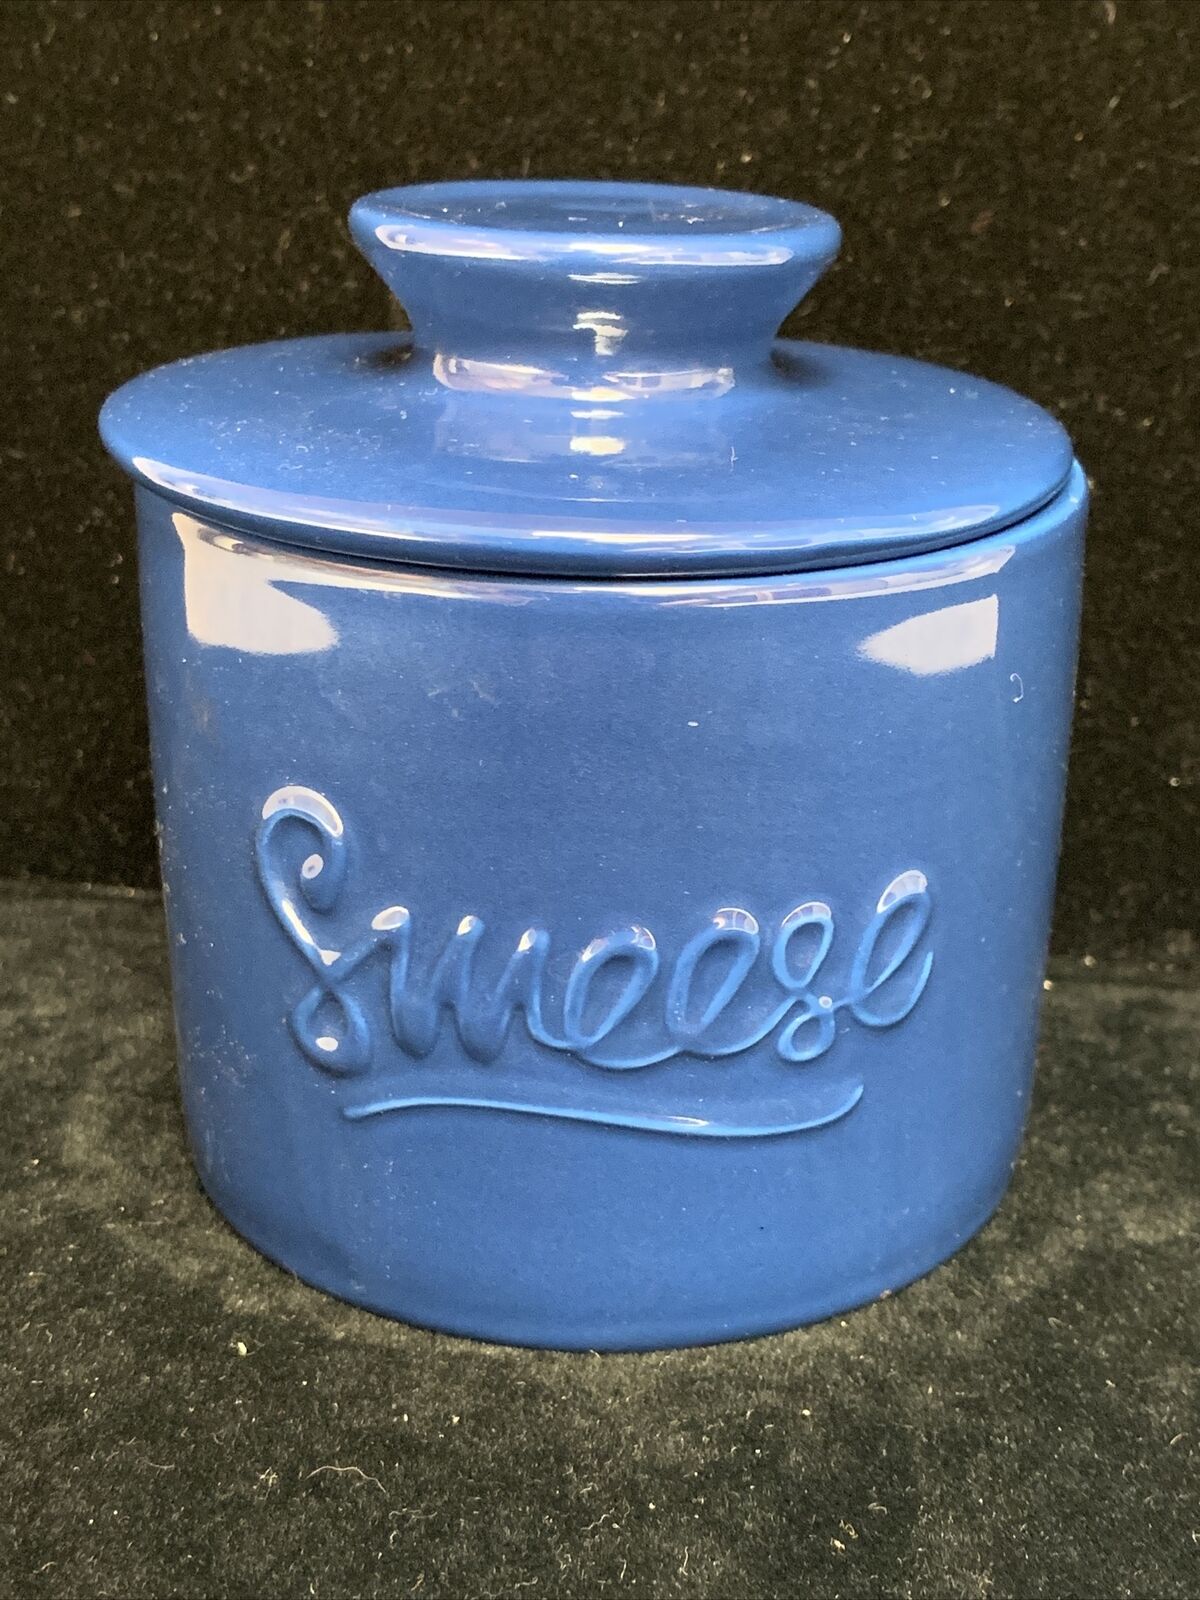 Sweese Porcelain Butter Keeper Crock Blue Bell Serving Dish (bb)